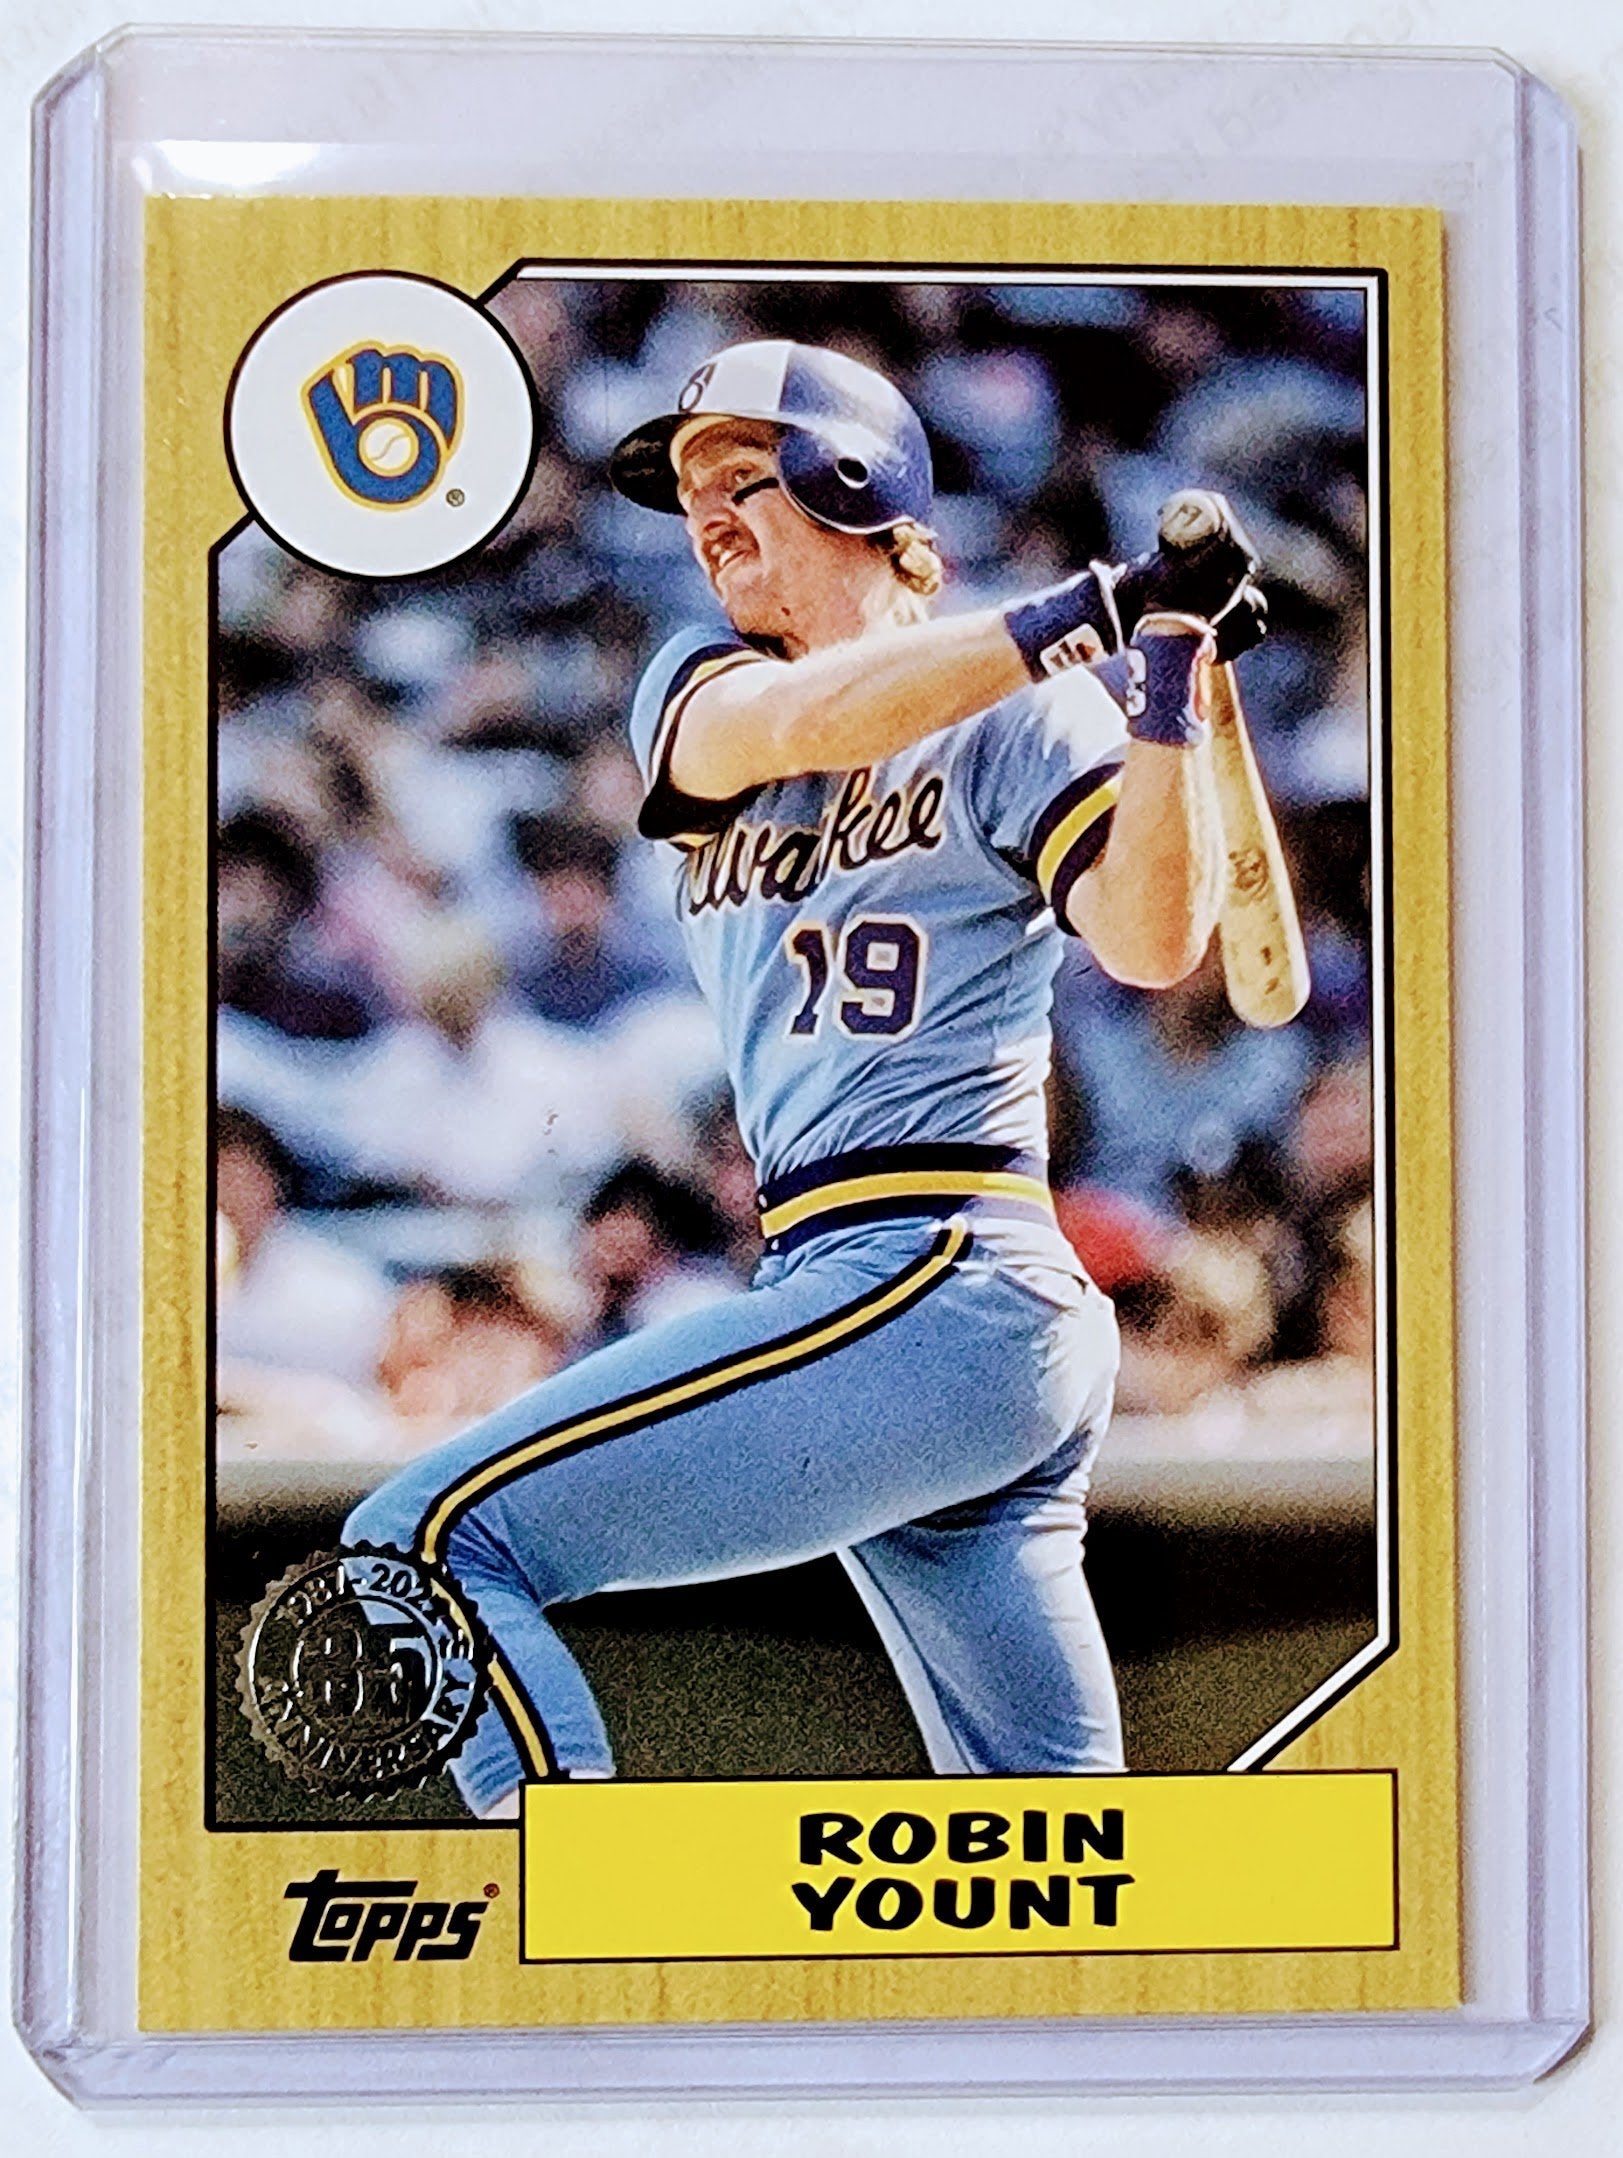 2022 Topps Series Robin Yount 35th Anniversary 1987 Baseball